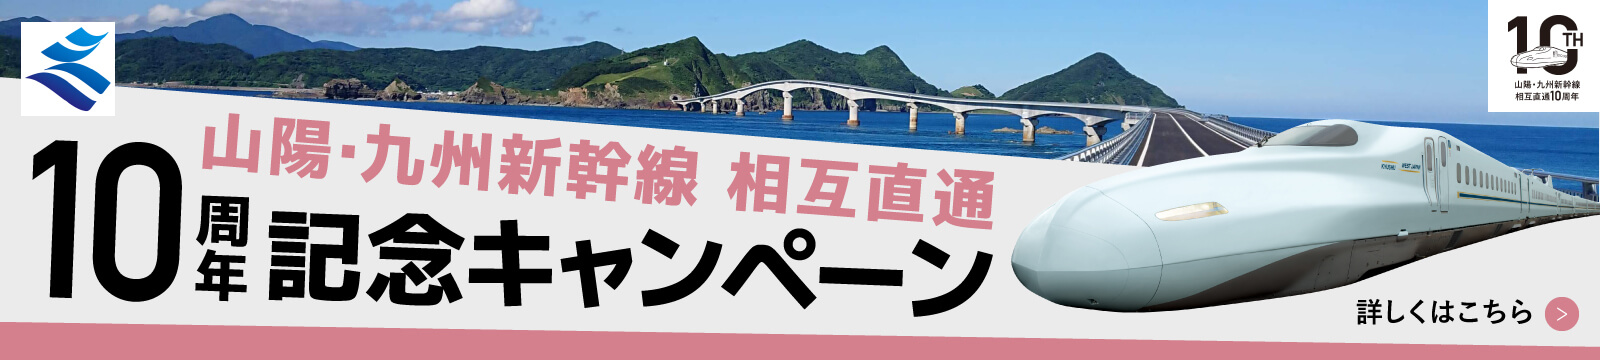 山陽・九州新幹線相互直通 10周年記念キャンペーン